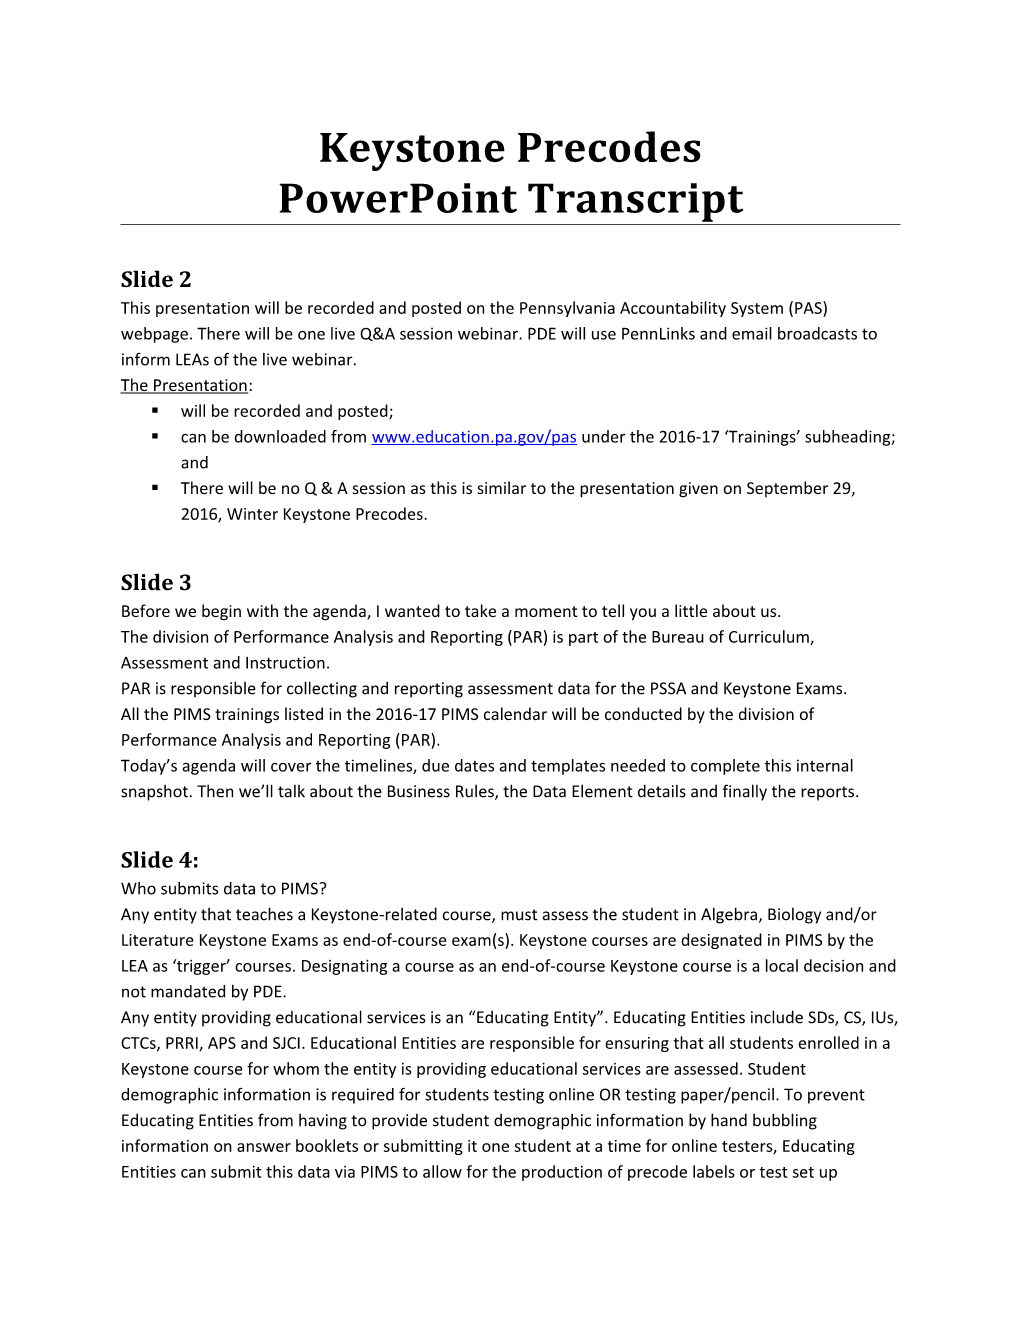 Keystone Precodes Powerpoint Transcript